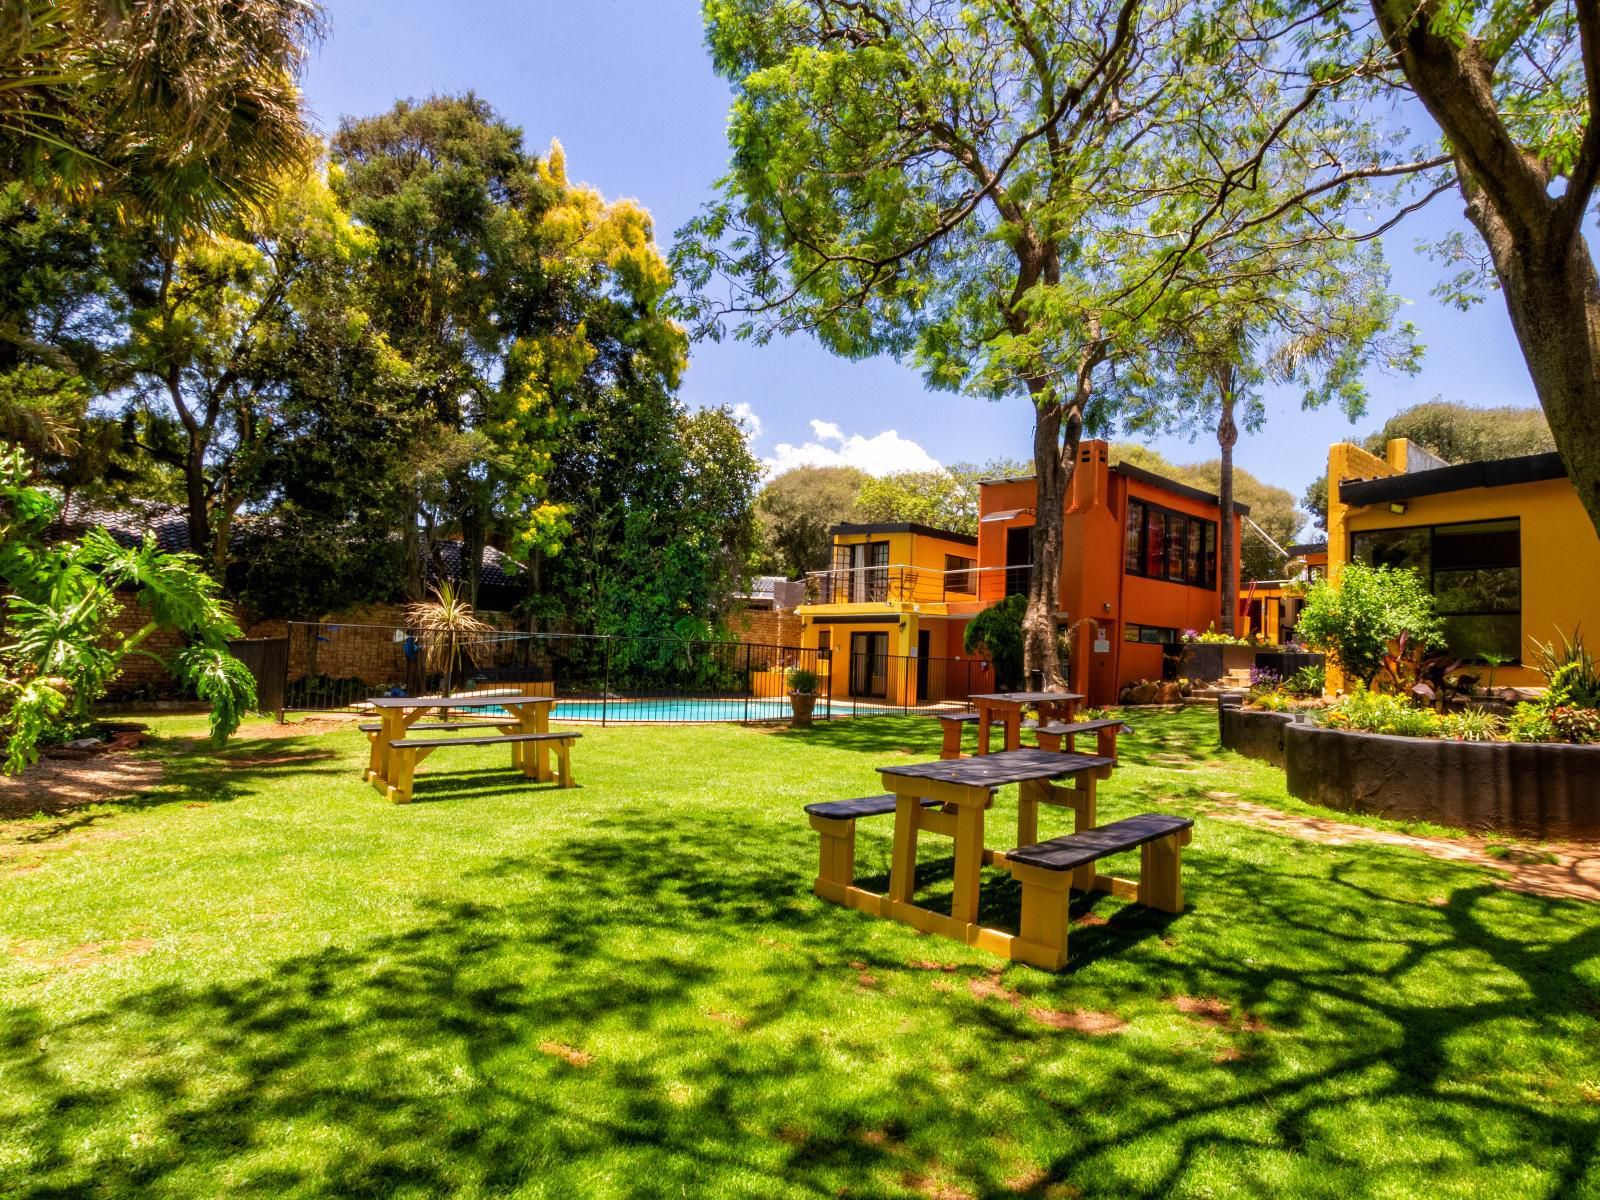 Linden Guesthouse Linden Johannesburg Gauteng South Africa House, Building, Architecture, Garden, Nature, Plant